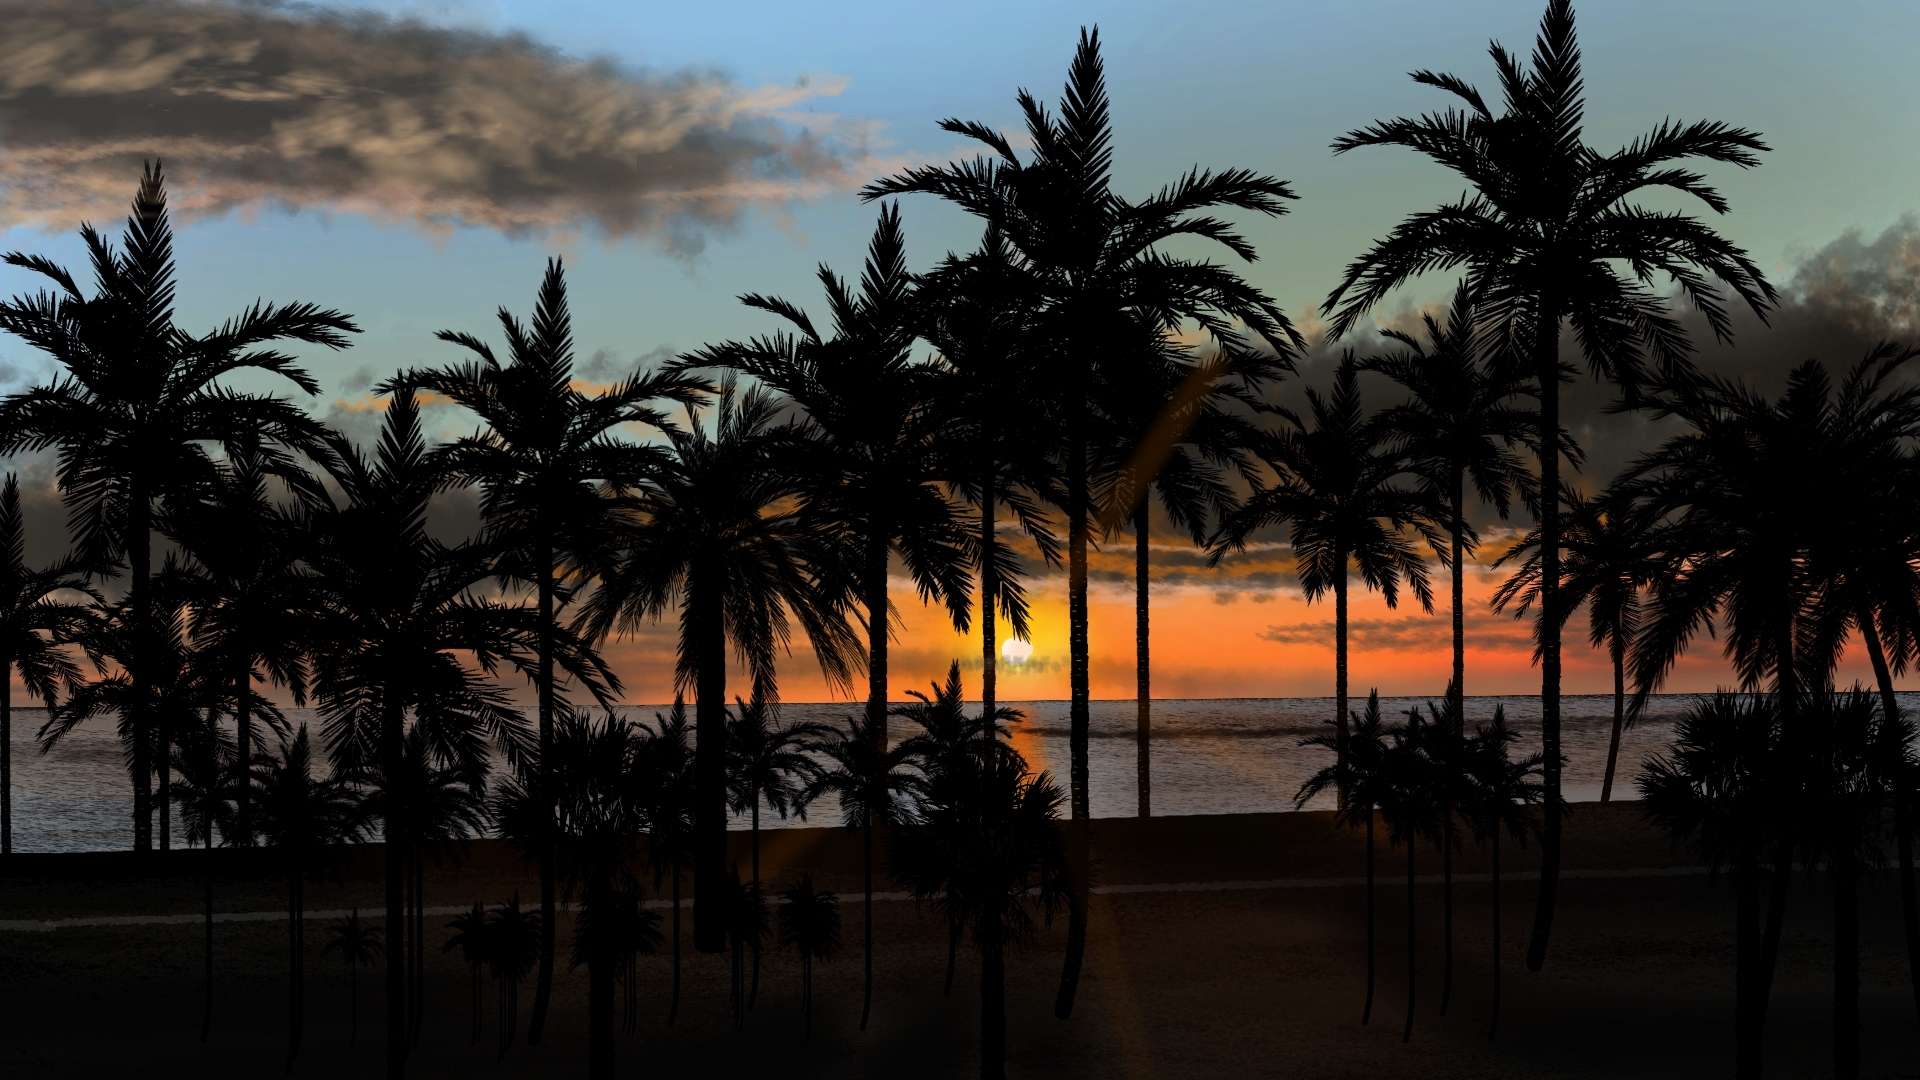 Digital Painting Digital Art Nature Beach Tropical Sunset Ocean View 1920x1080